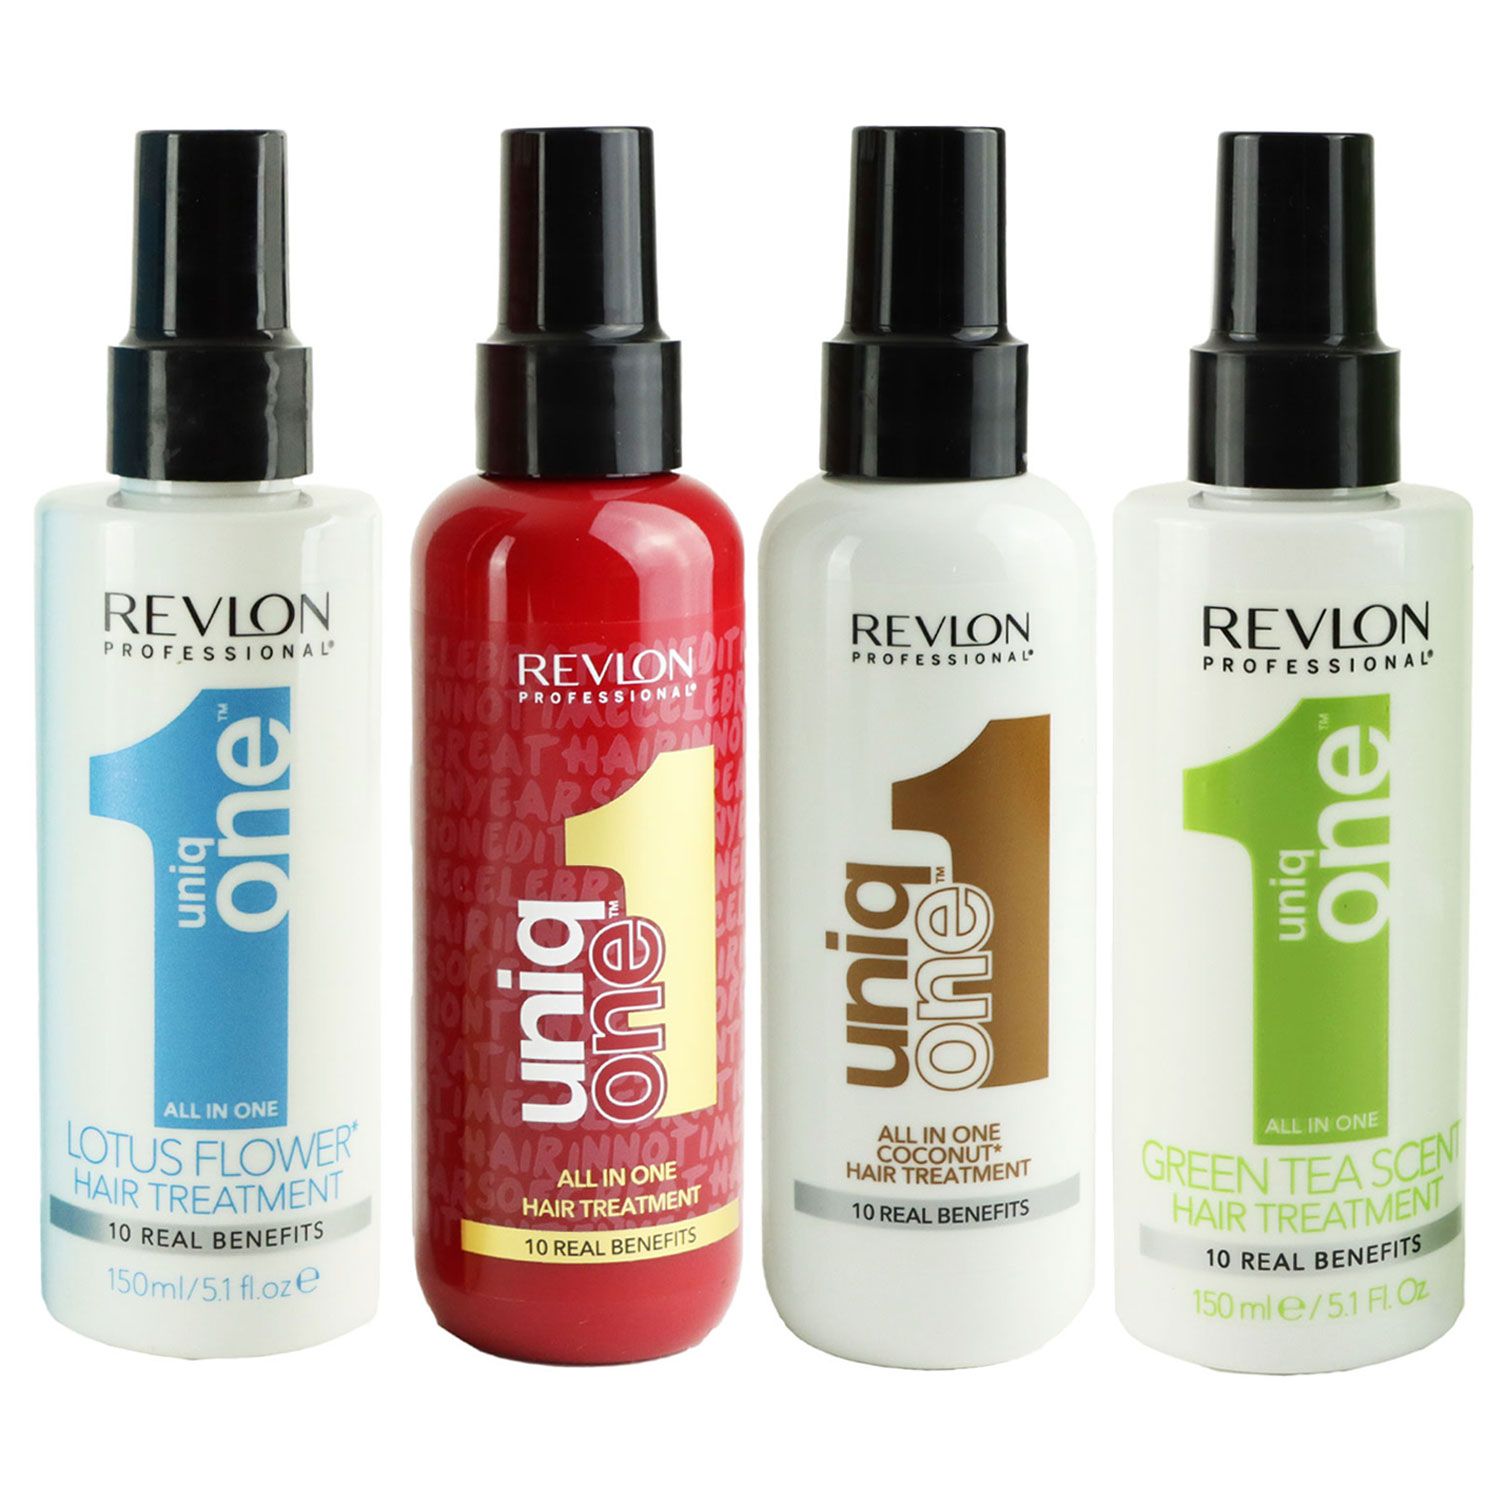 4 Mix Hair Revlon Riemax Set Treatment bei in Professional 150 One All x Uniq ml One